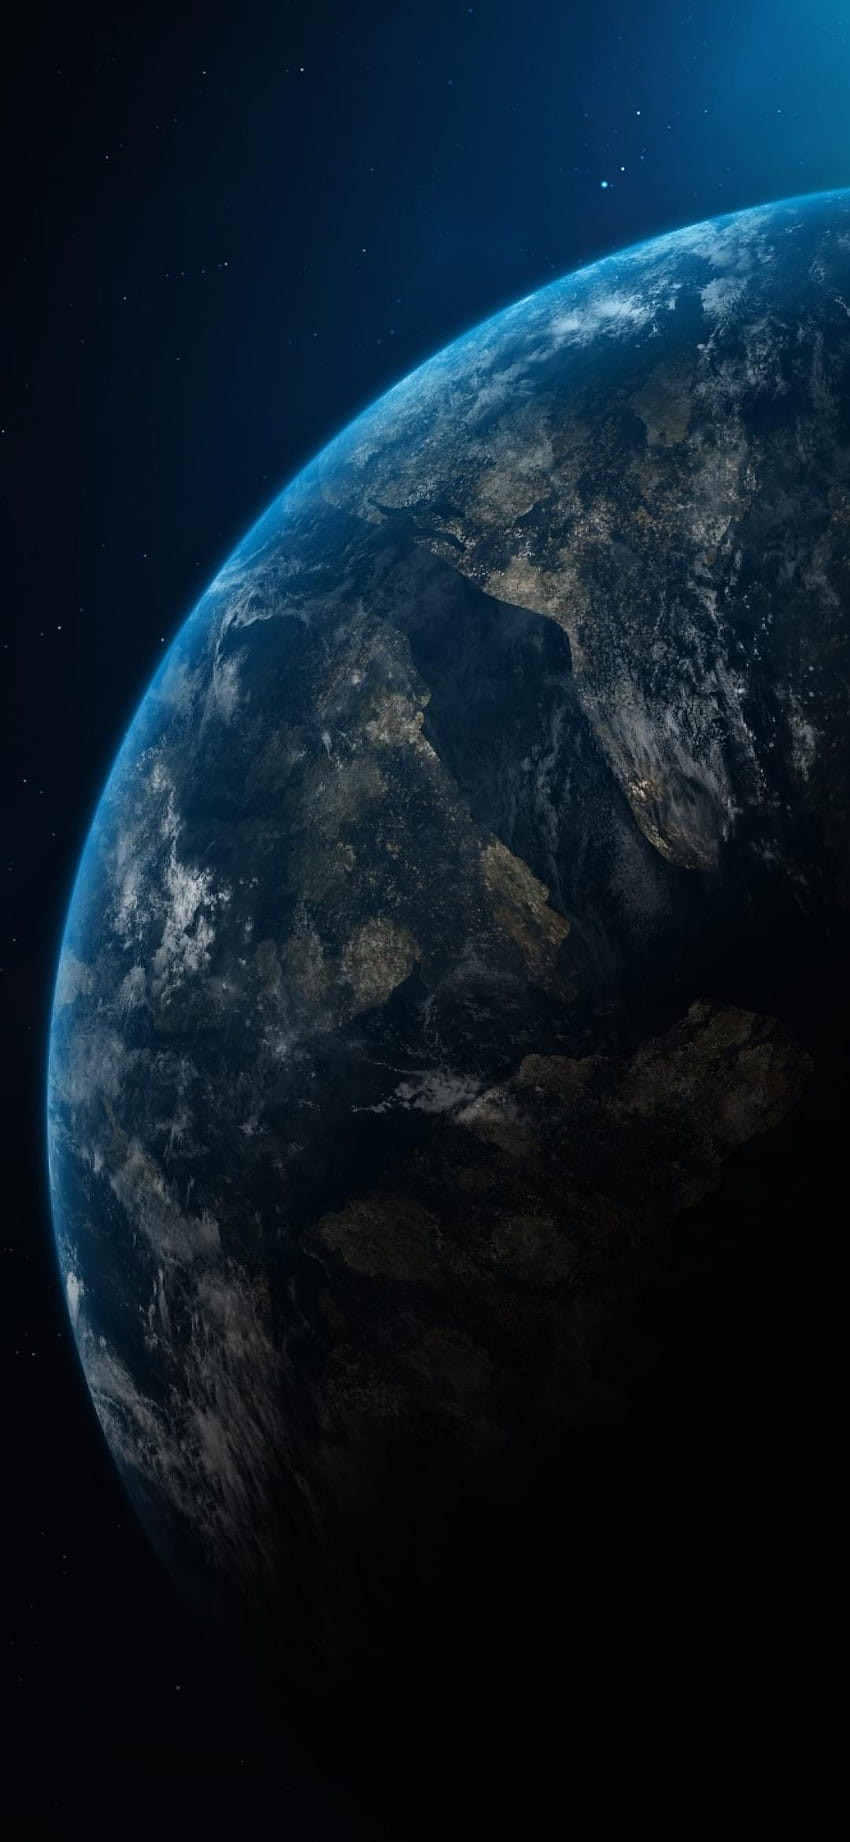 1080x2340 Planet Earth in Dark Universe 1080x2340 Resolution, 1080x2340 dark android HD phone wallpaper